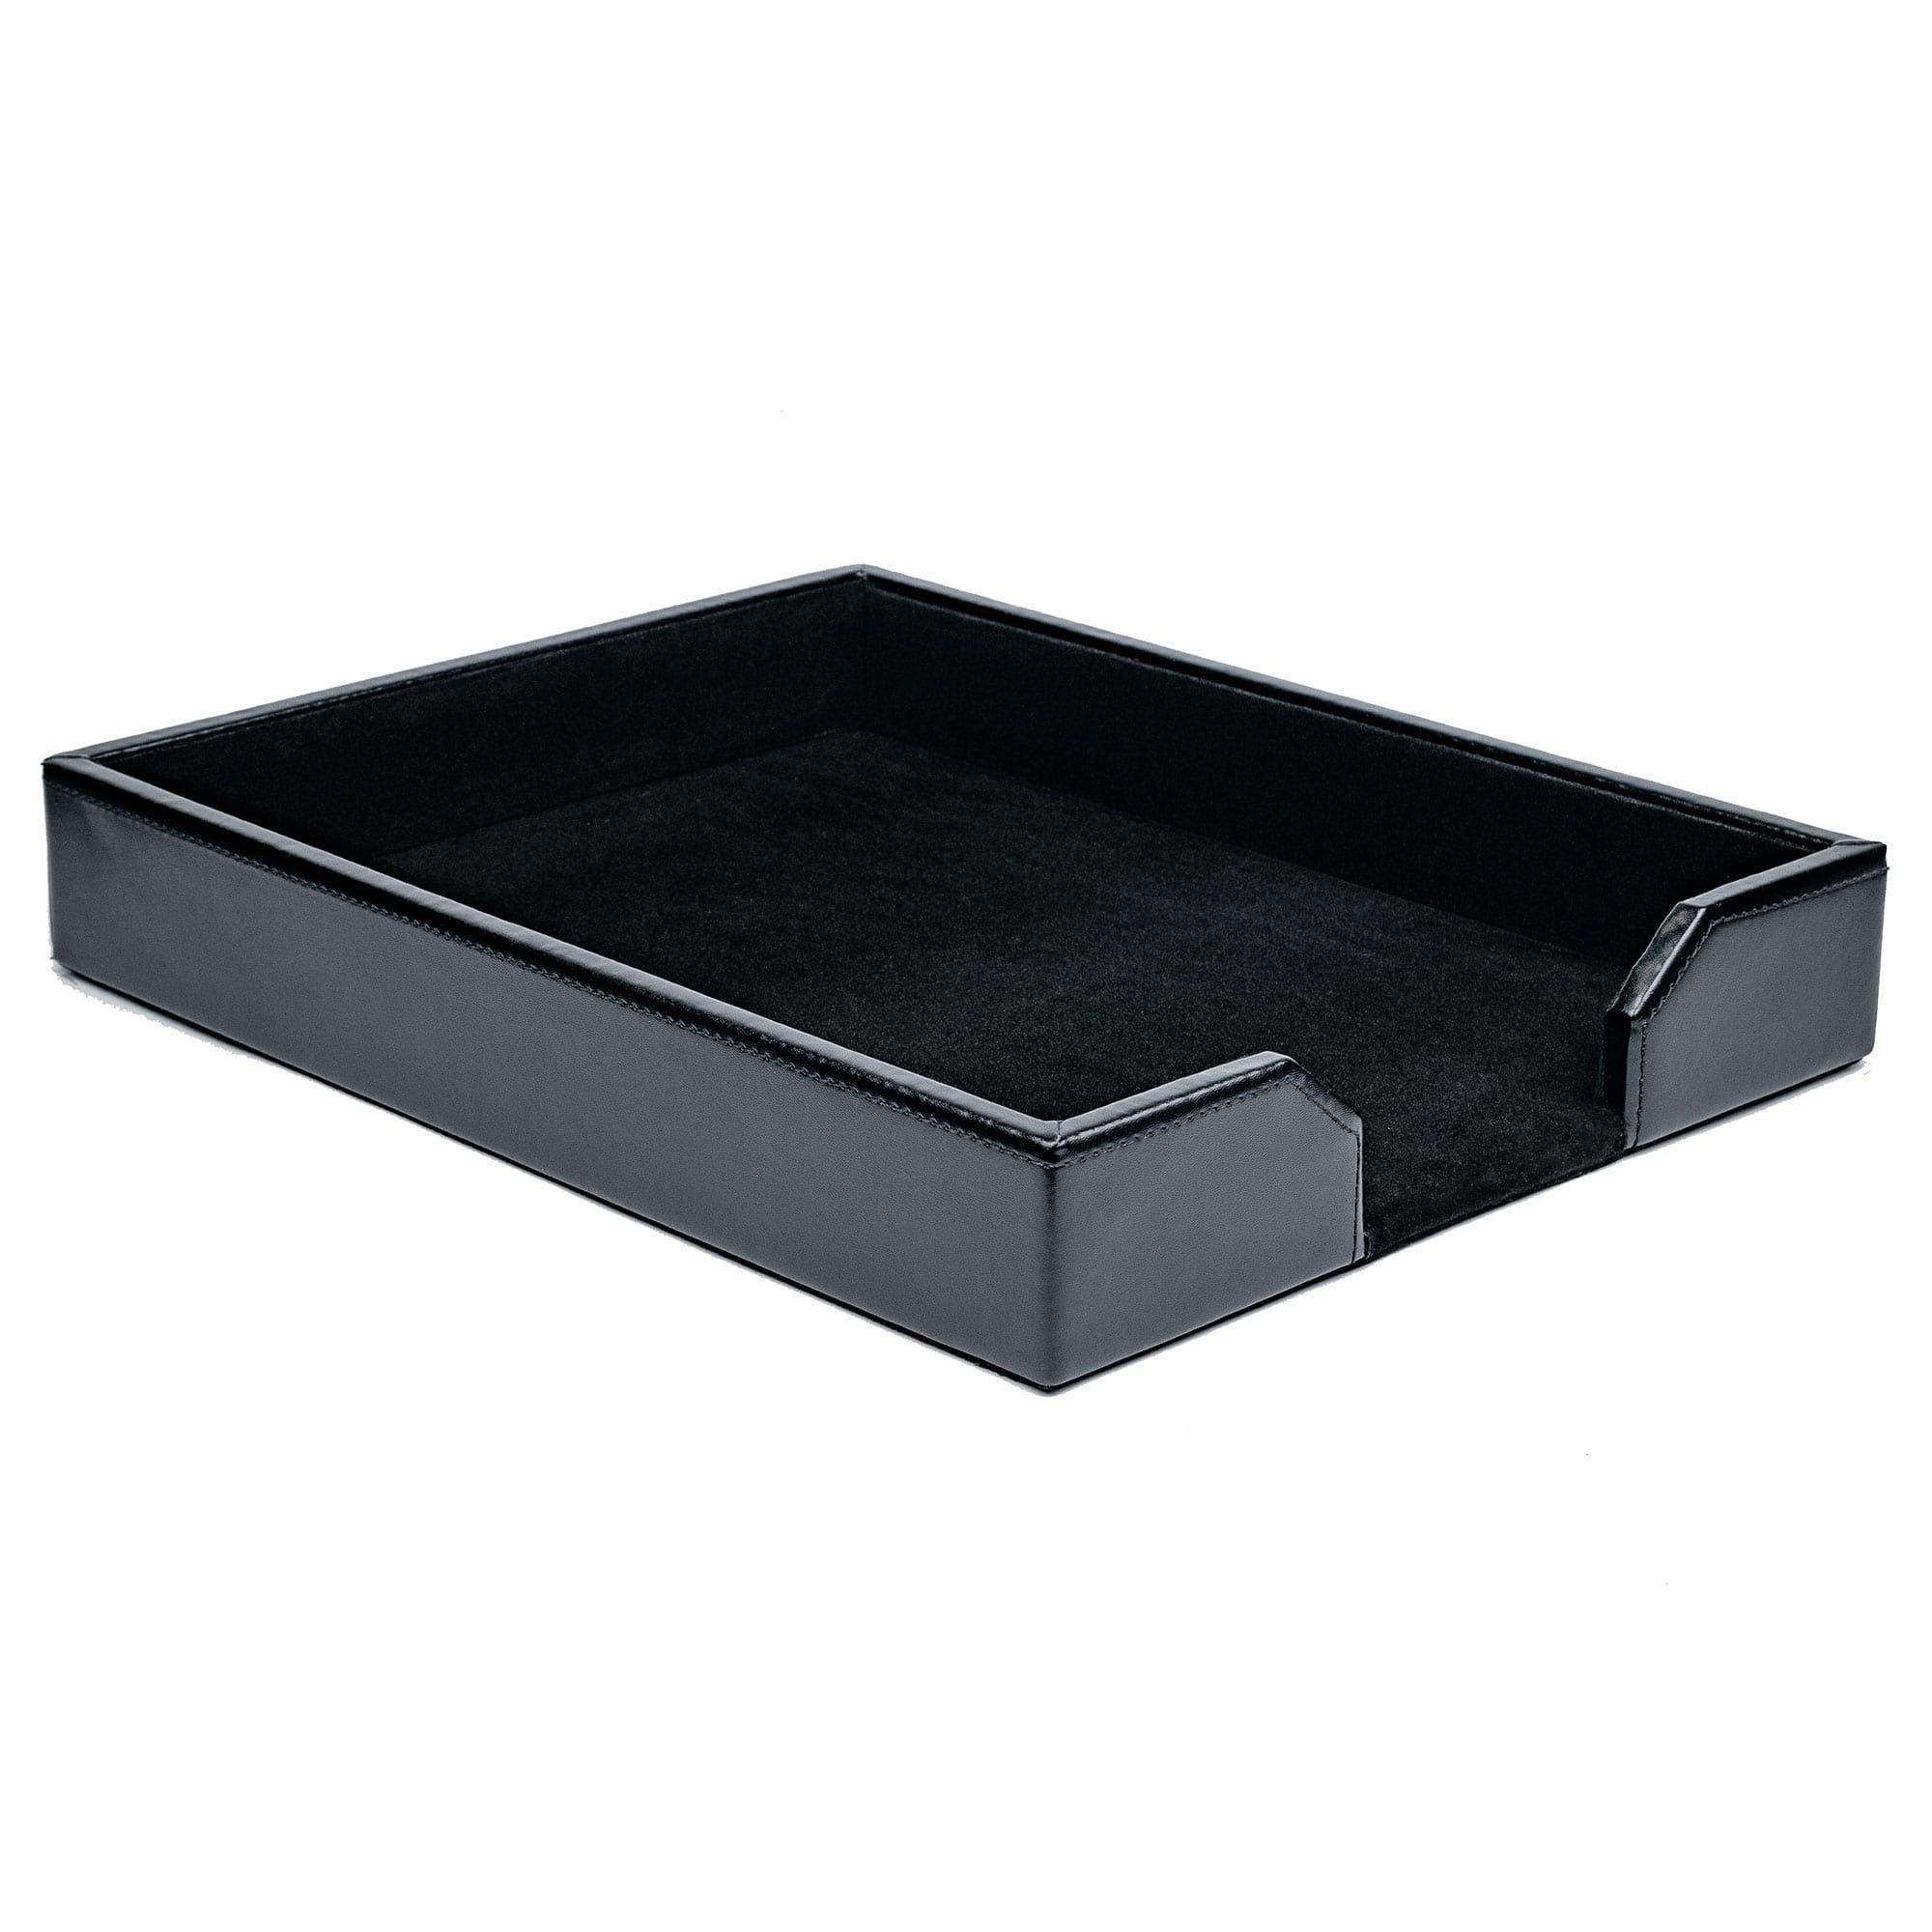 dacasso bonded leather desktop tray luxury letter holder & paper organizer for desk, 13.5in x 10.5in x 2.13in, black